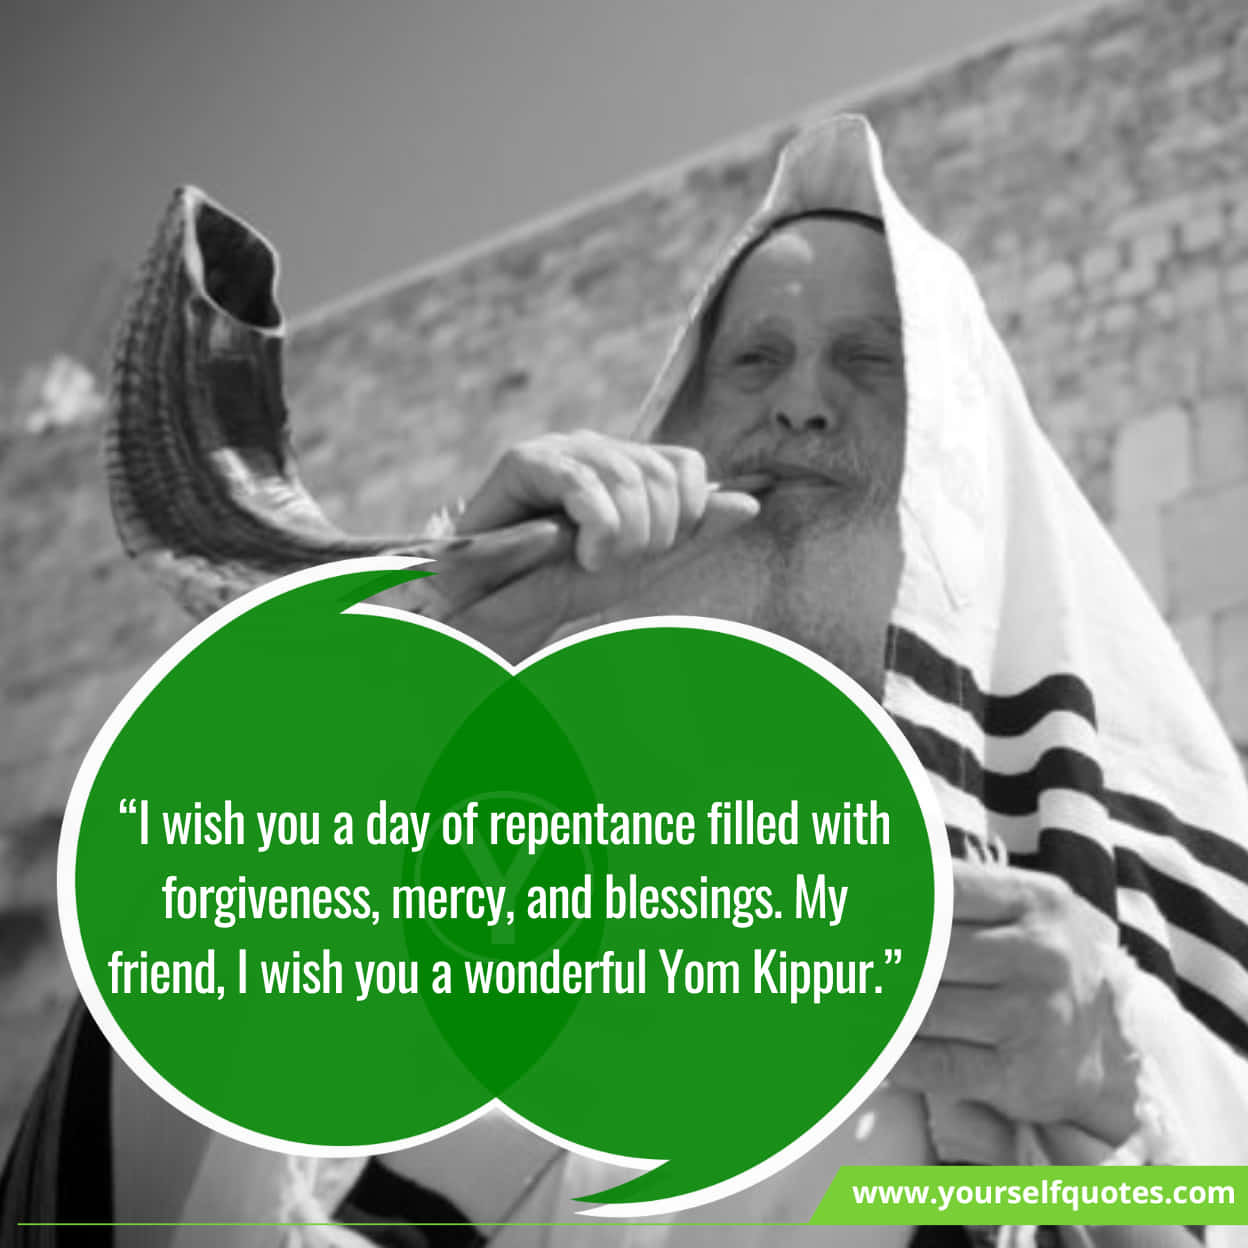 Yom Kippur Sayings For Friends